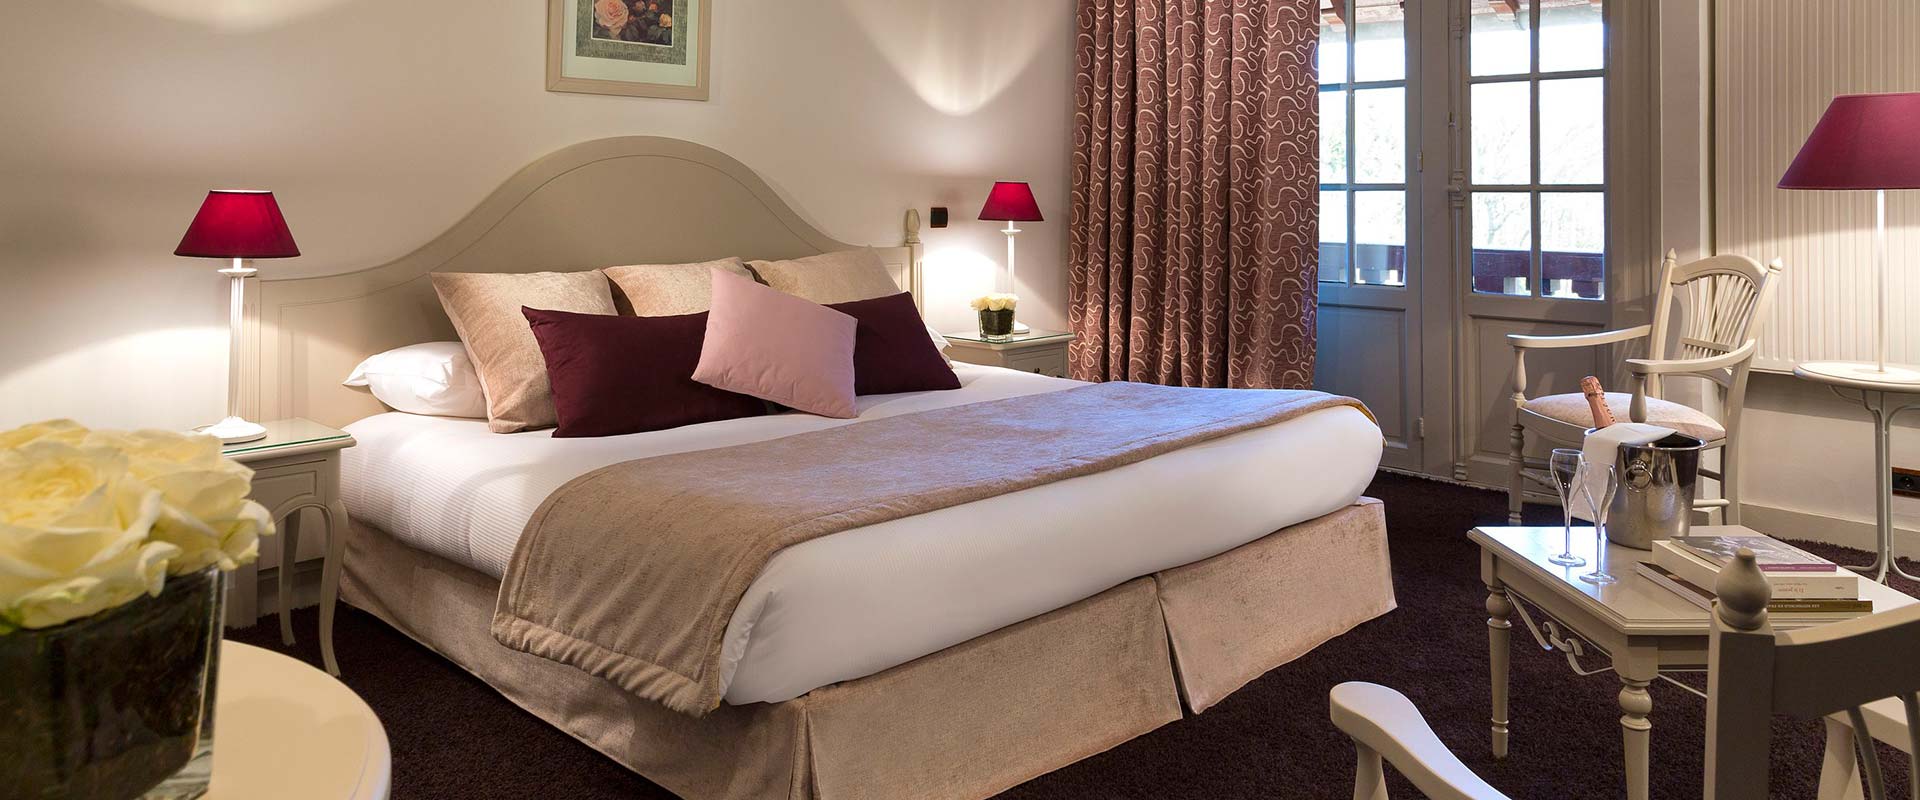 Chambres de Luxe - chambres château hôtel Chantilly